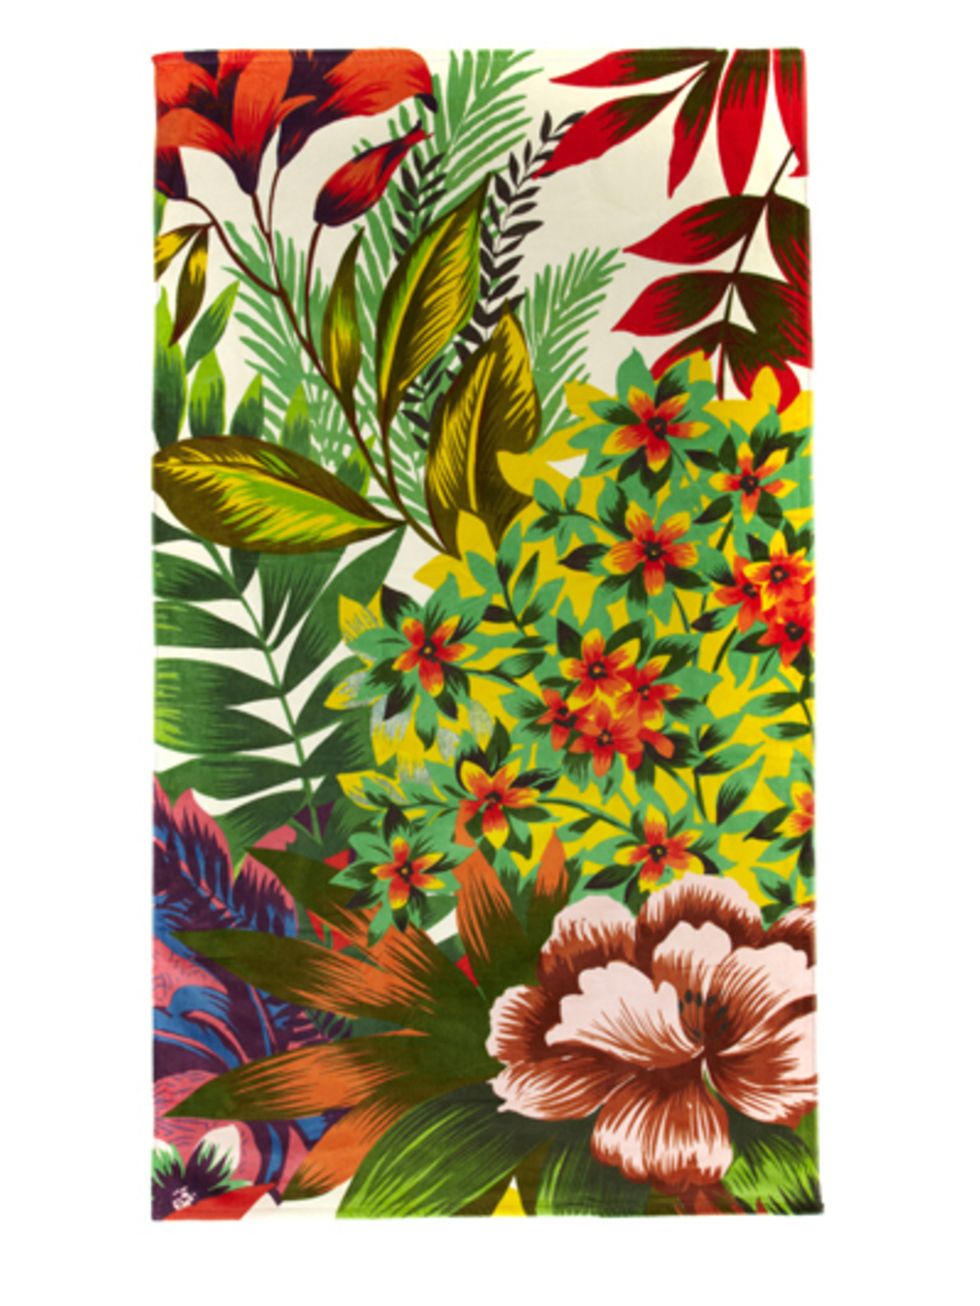 Organism, Petal, Leaf, Flower, Botany, Art, Flowering plant, Colorfulness, Painting, Illustration, 